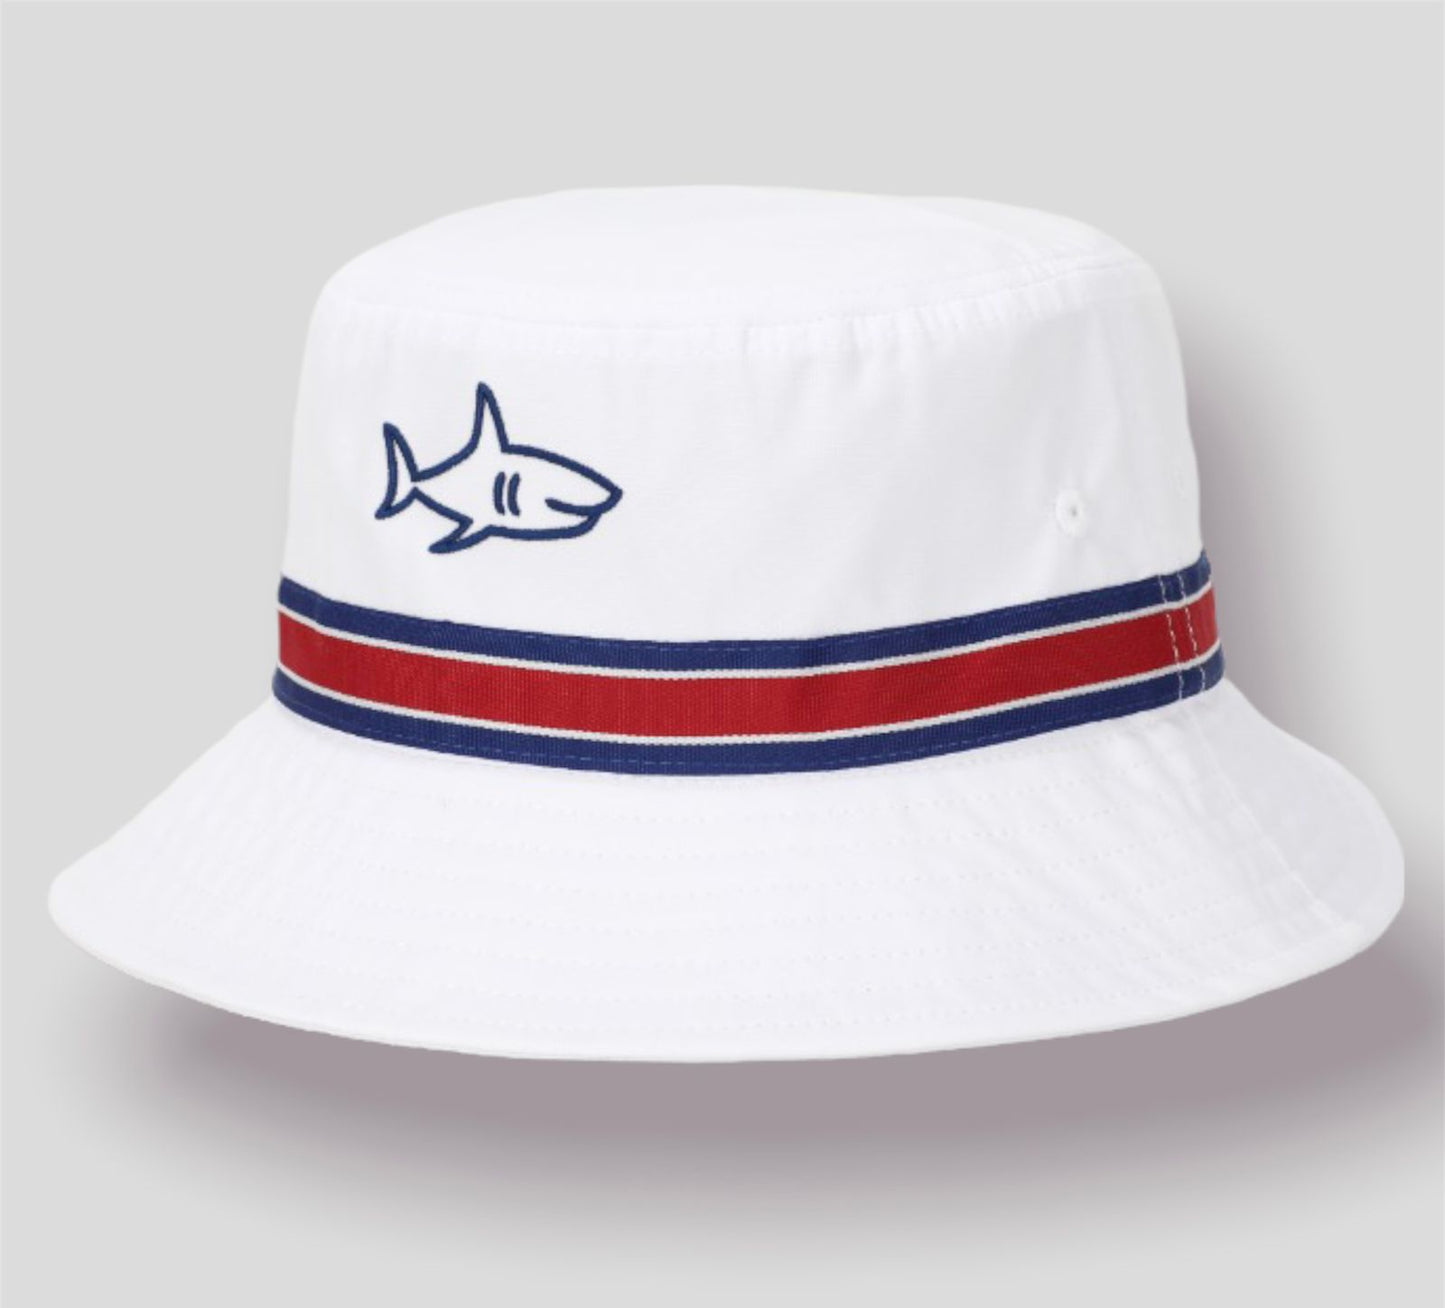 Shark Bucket Hat